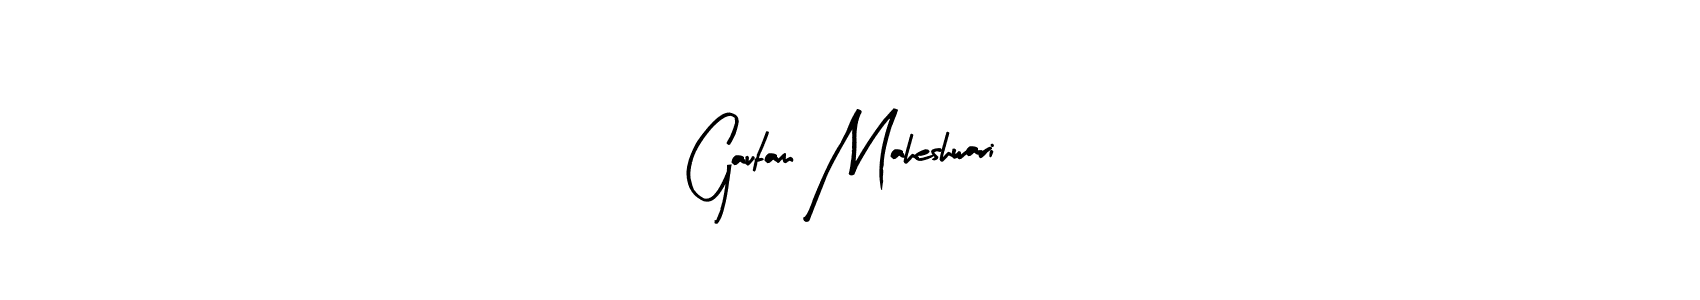 Make a beautiful signature design for name Gautam Maheshwari. Use this online signature maker to create a handwritten signature for free. Gautam Maheshwari signature style 8 images and pictures png